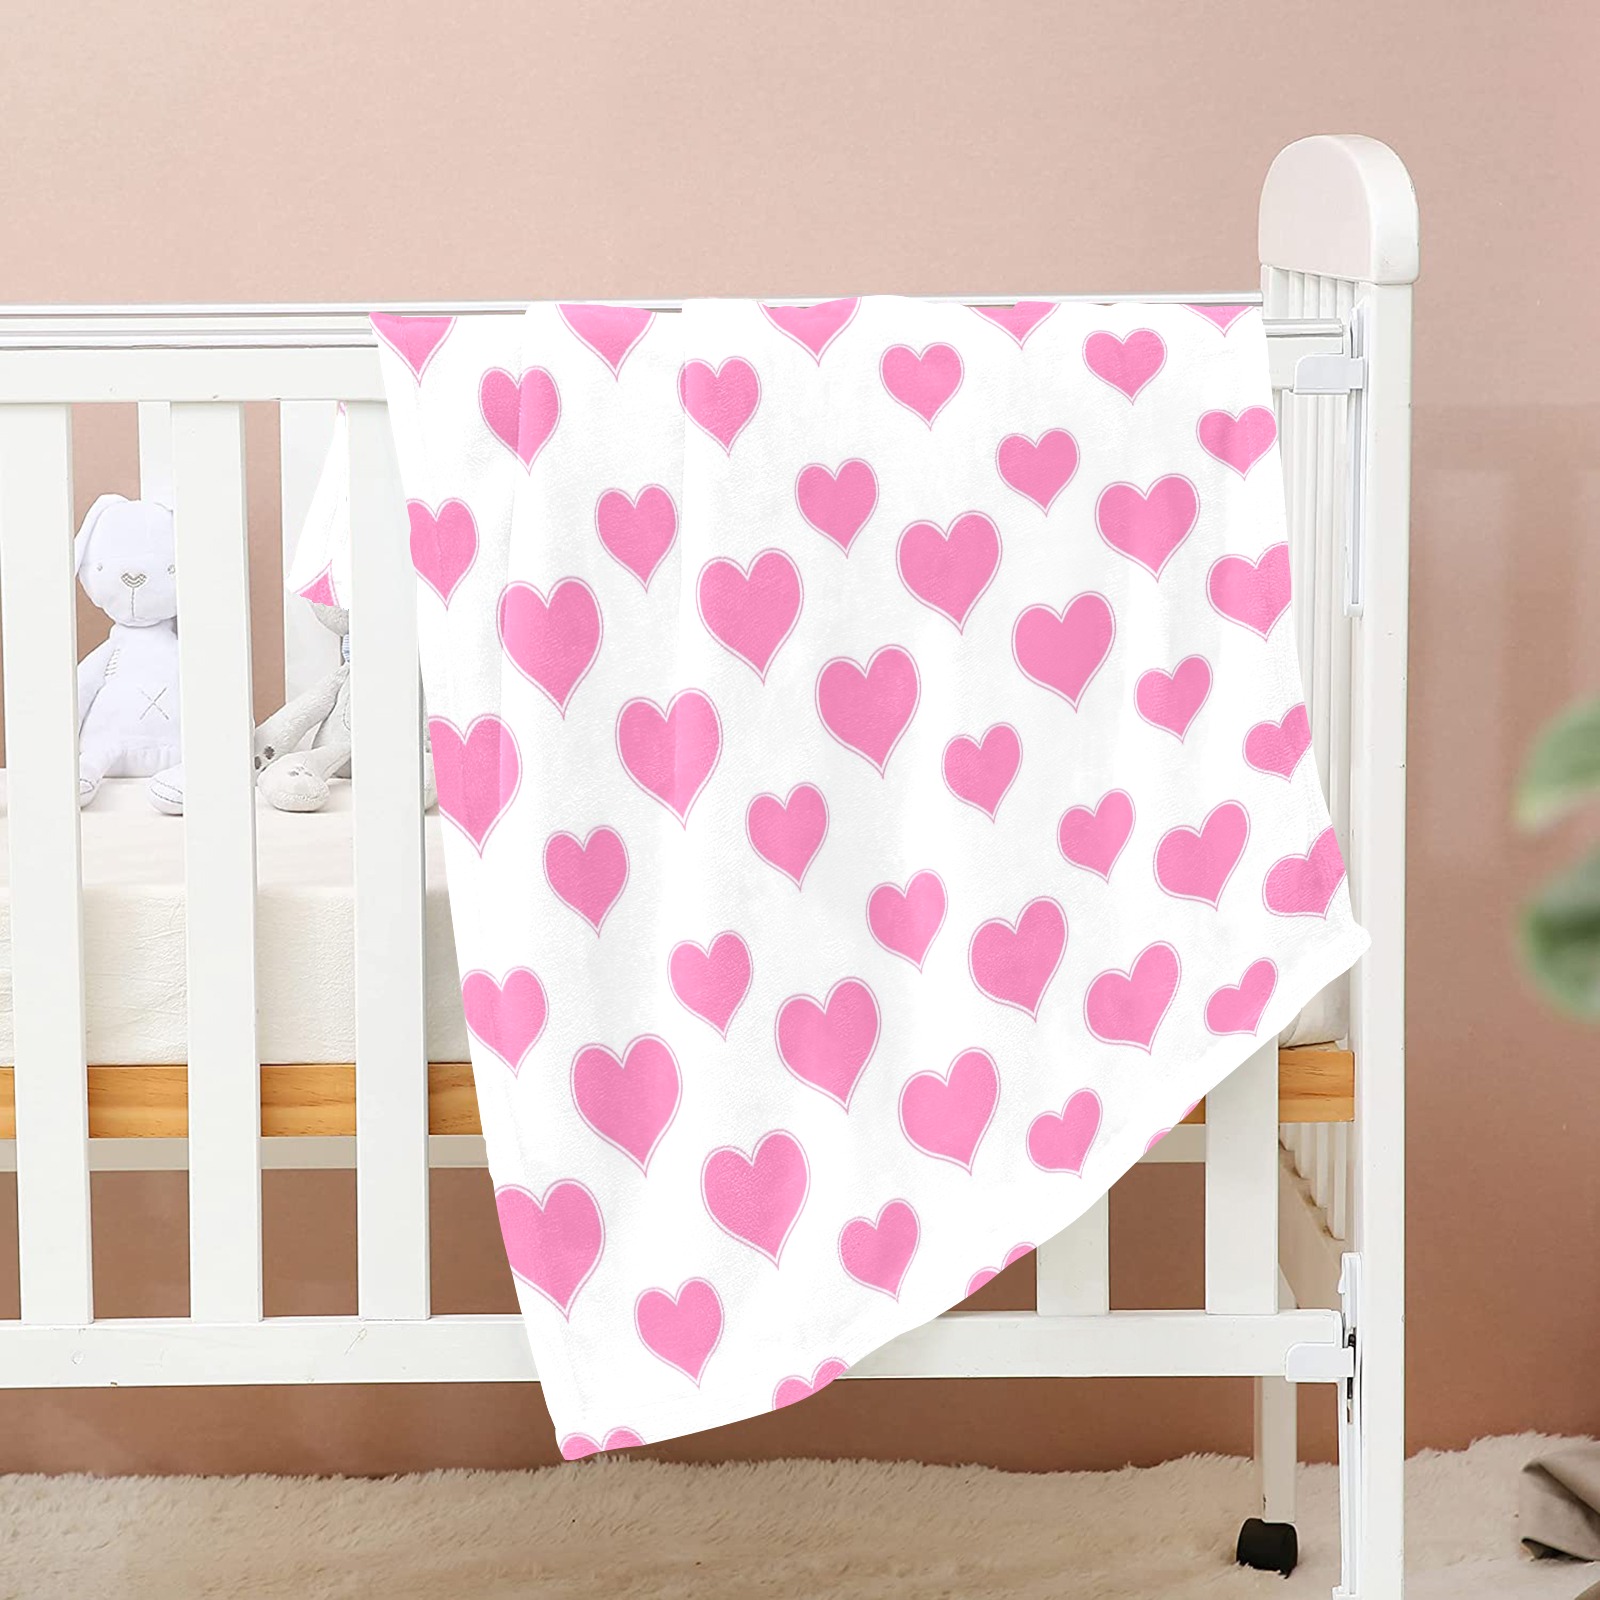 Valentine Hearts Baby Blanket - Small, 30x40 Baby Blanket 30"x40"